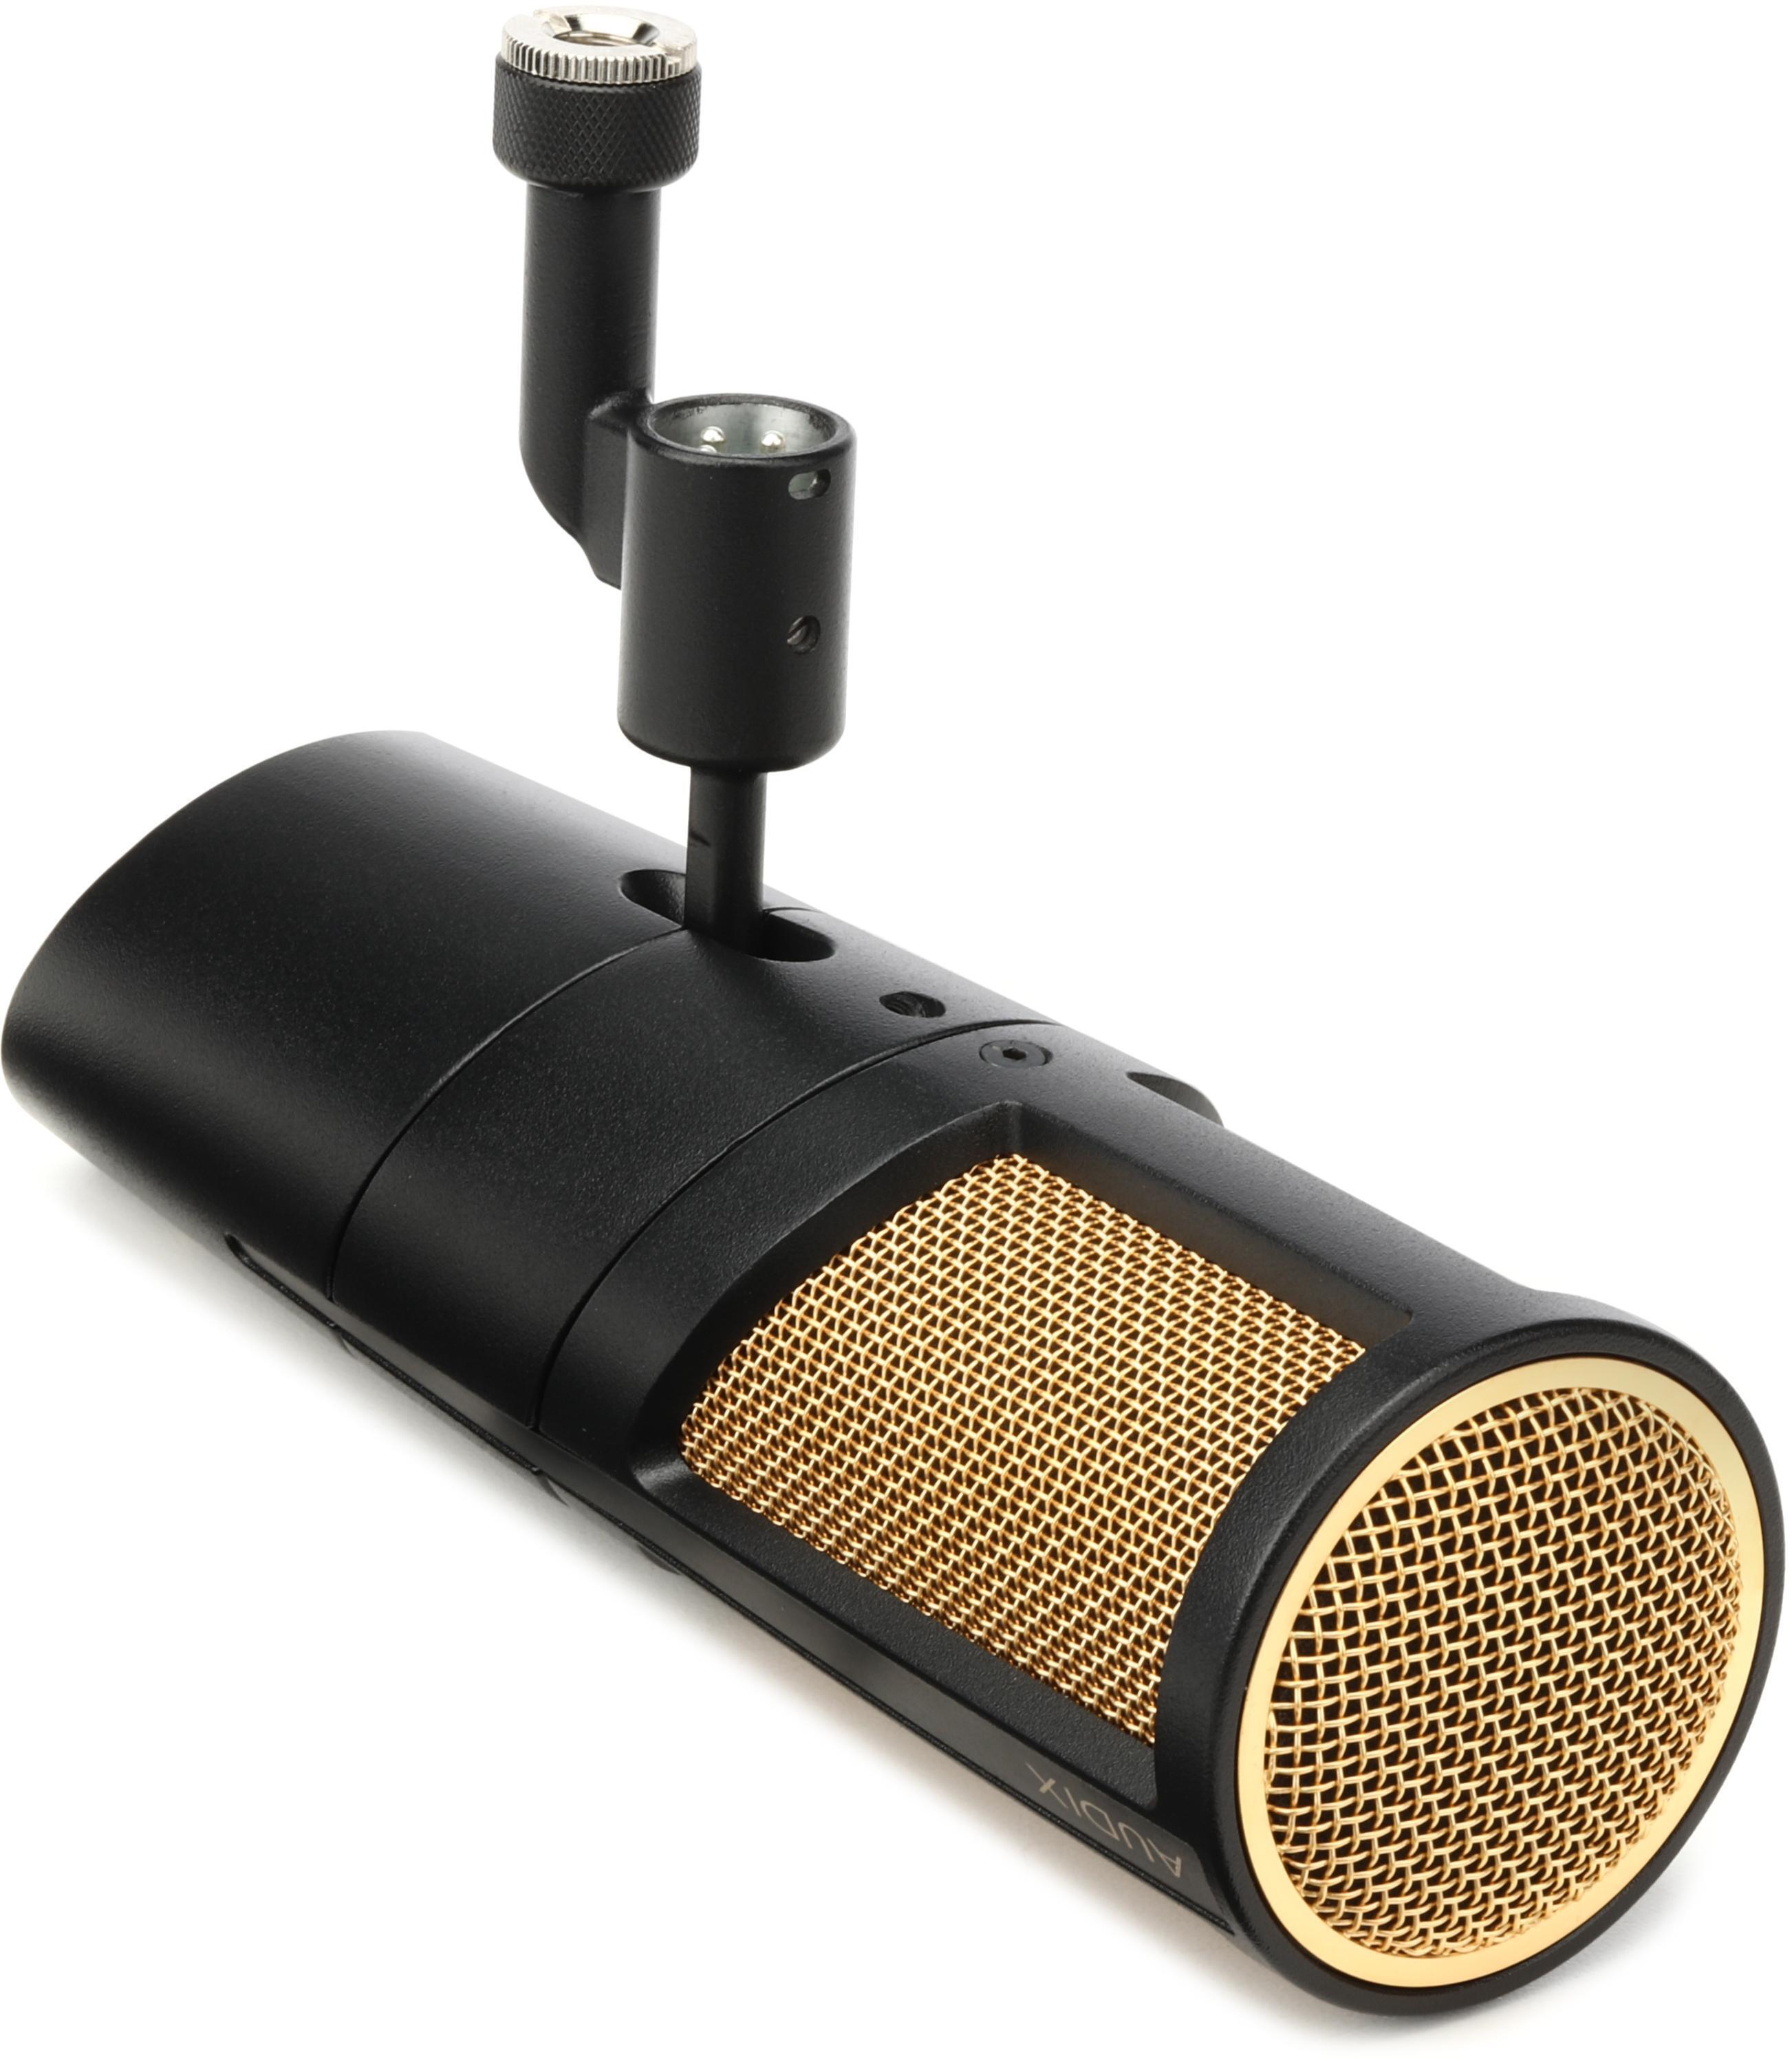 Bundled Item: Audix PDX720 Hypercardioid Dynamic Vocal Microphone